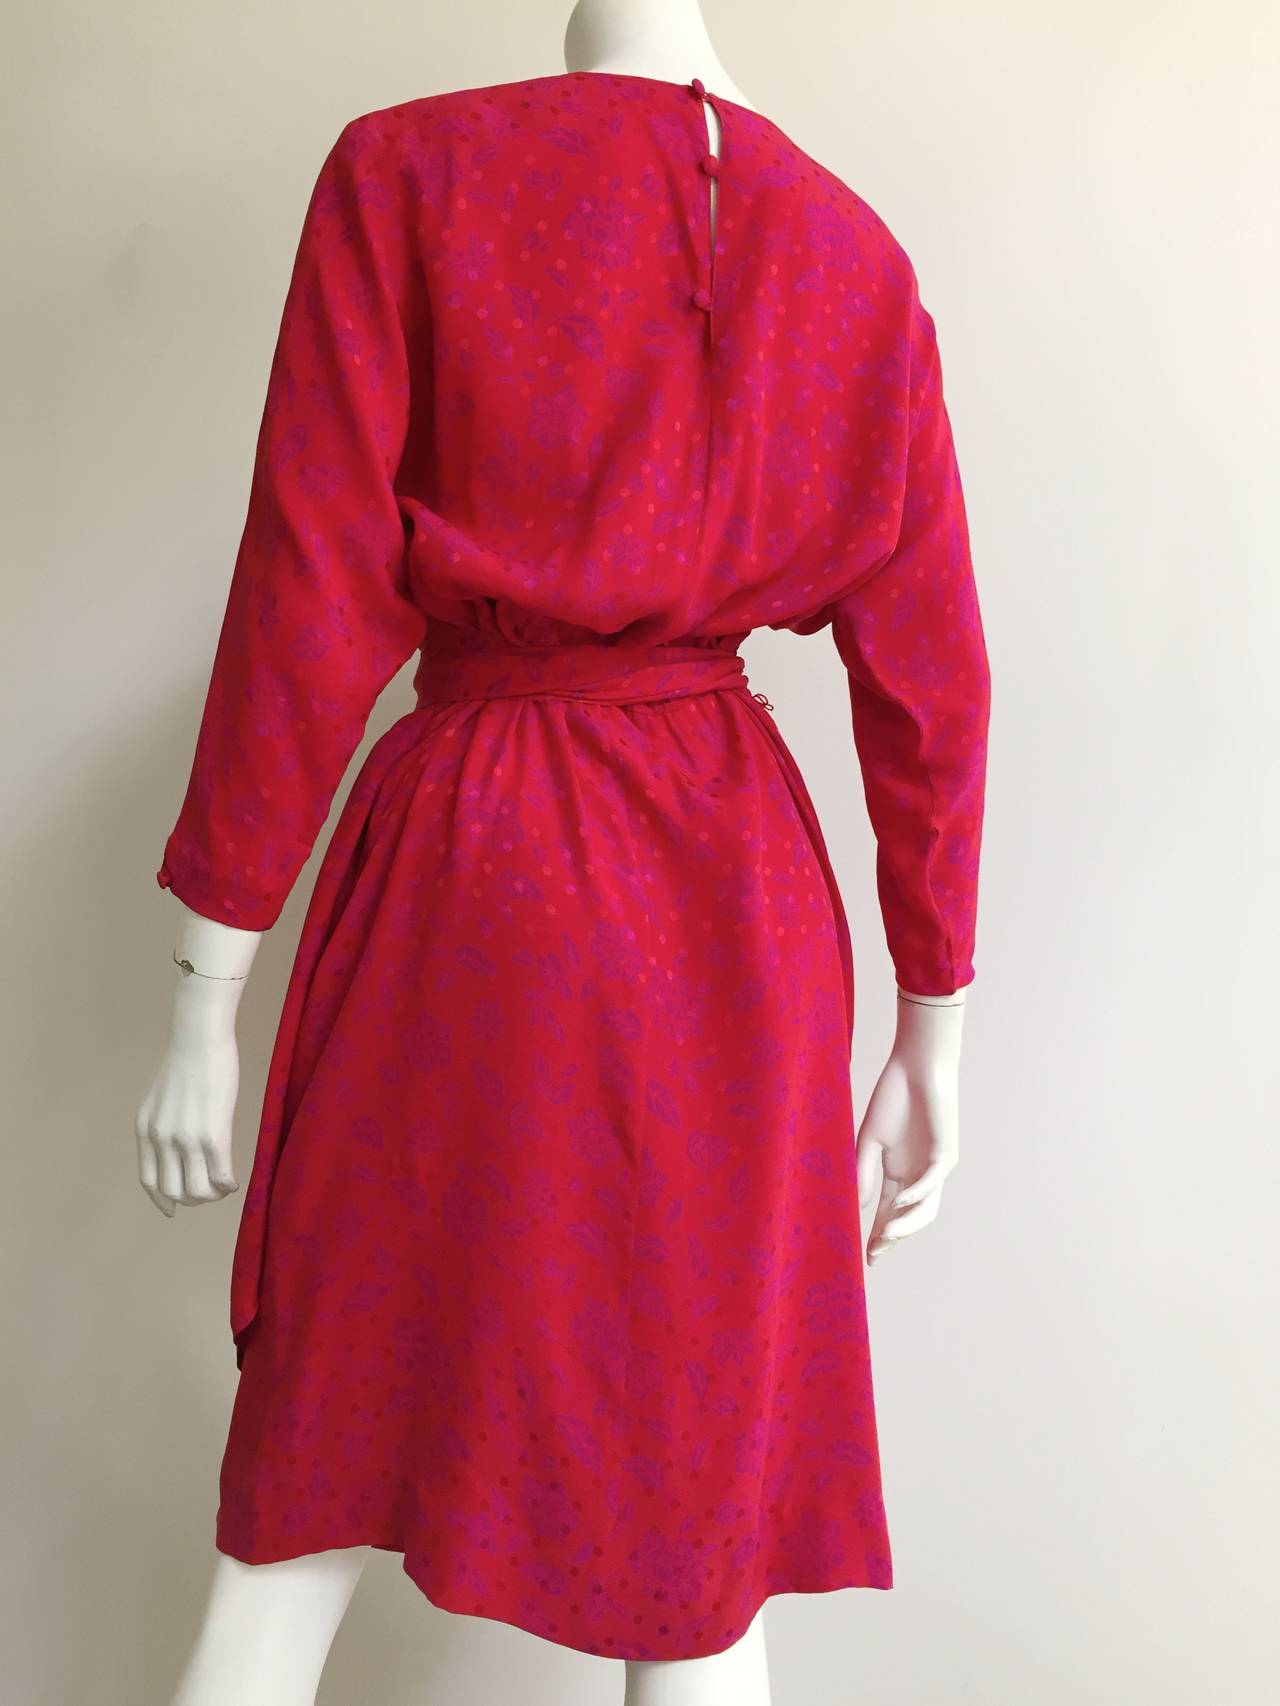 Guy Laroche Silk Dress With Pockets, 1970s For Sale 1